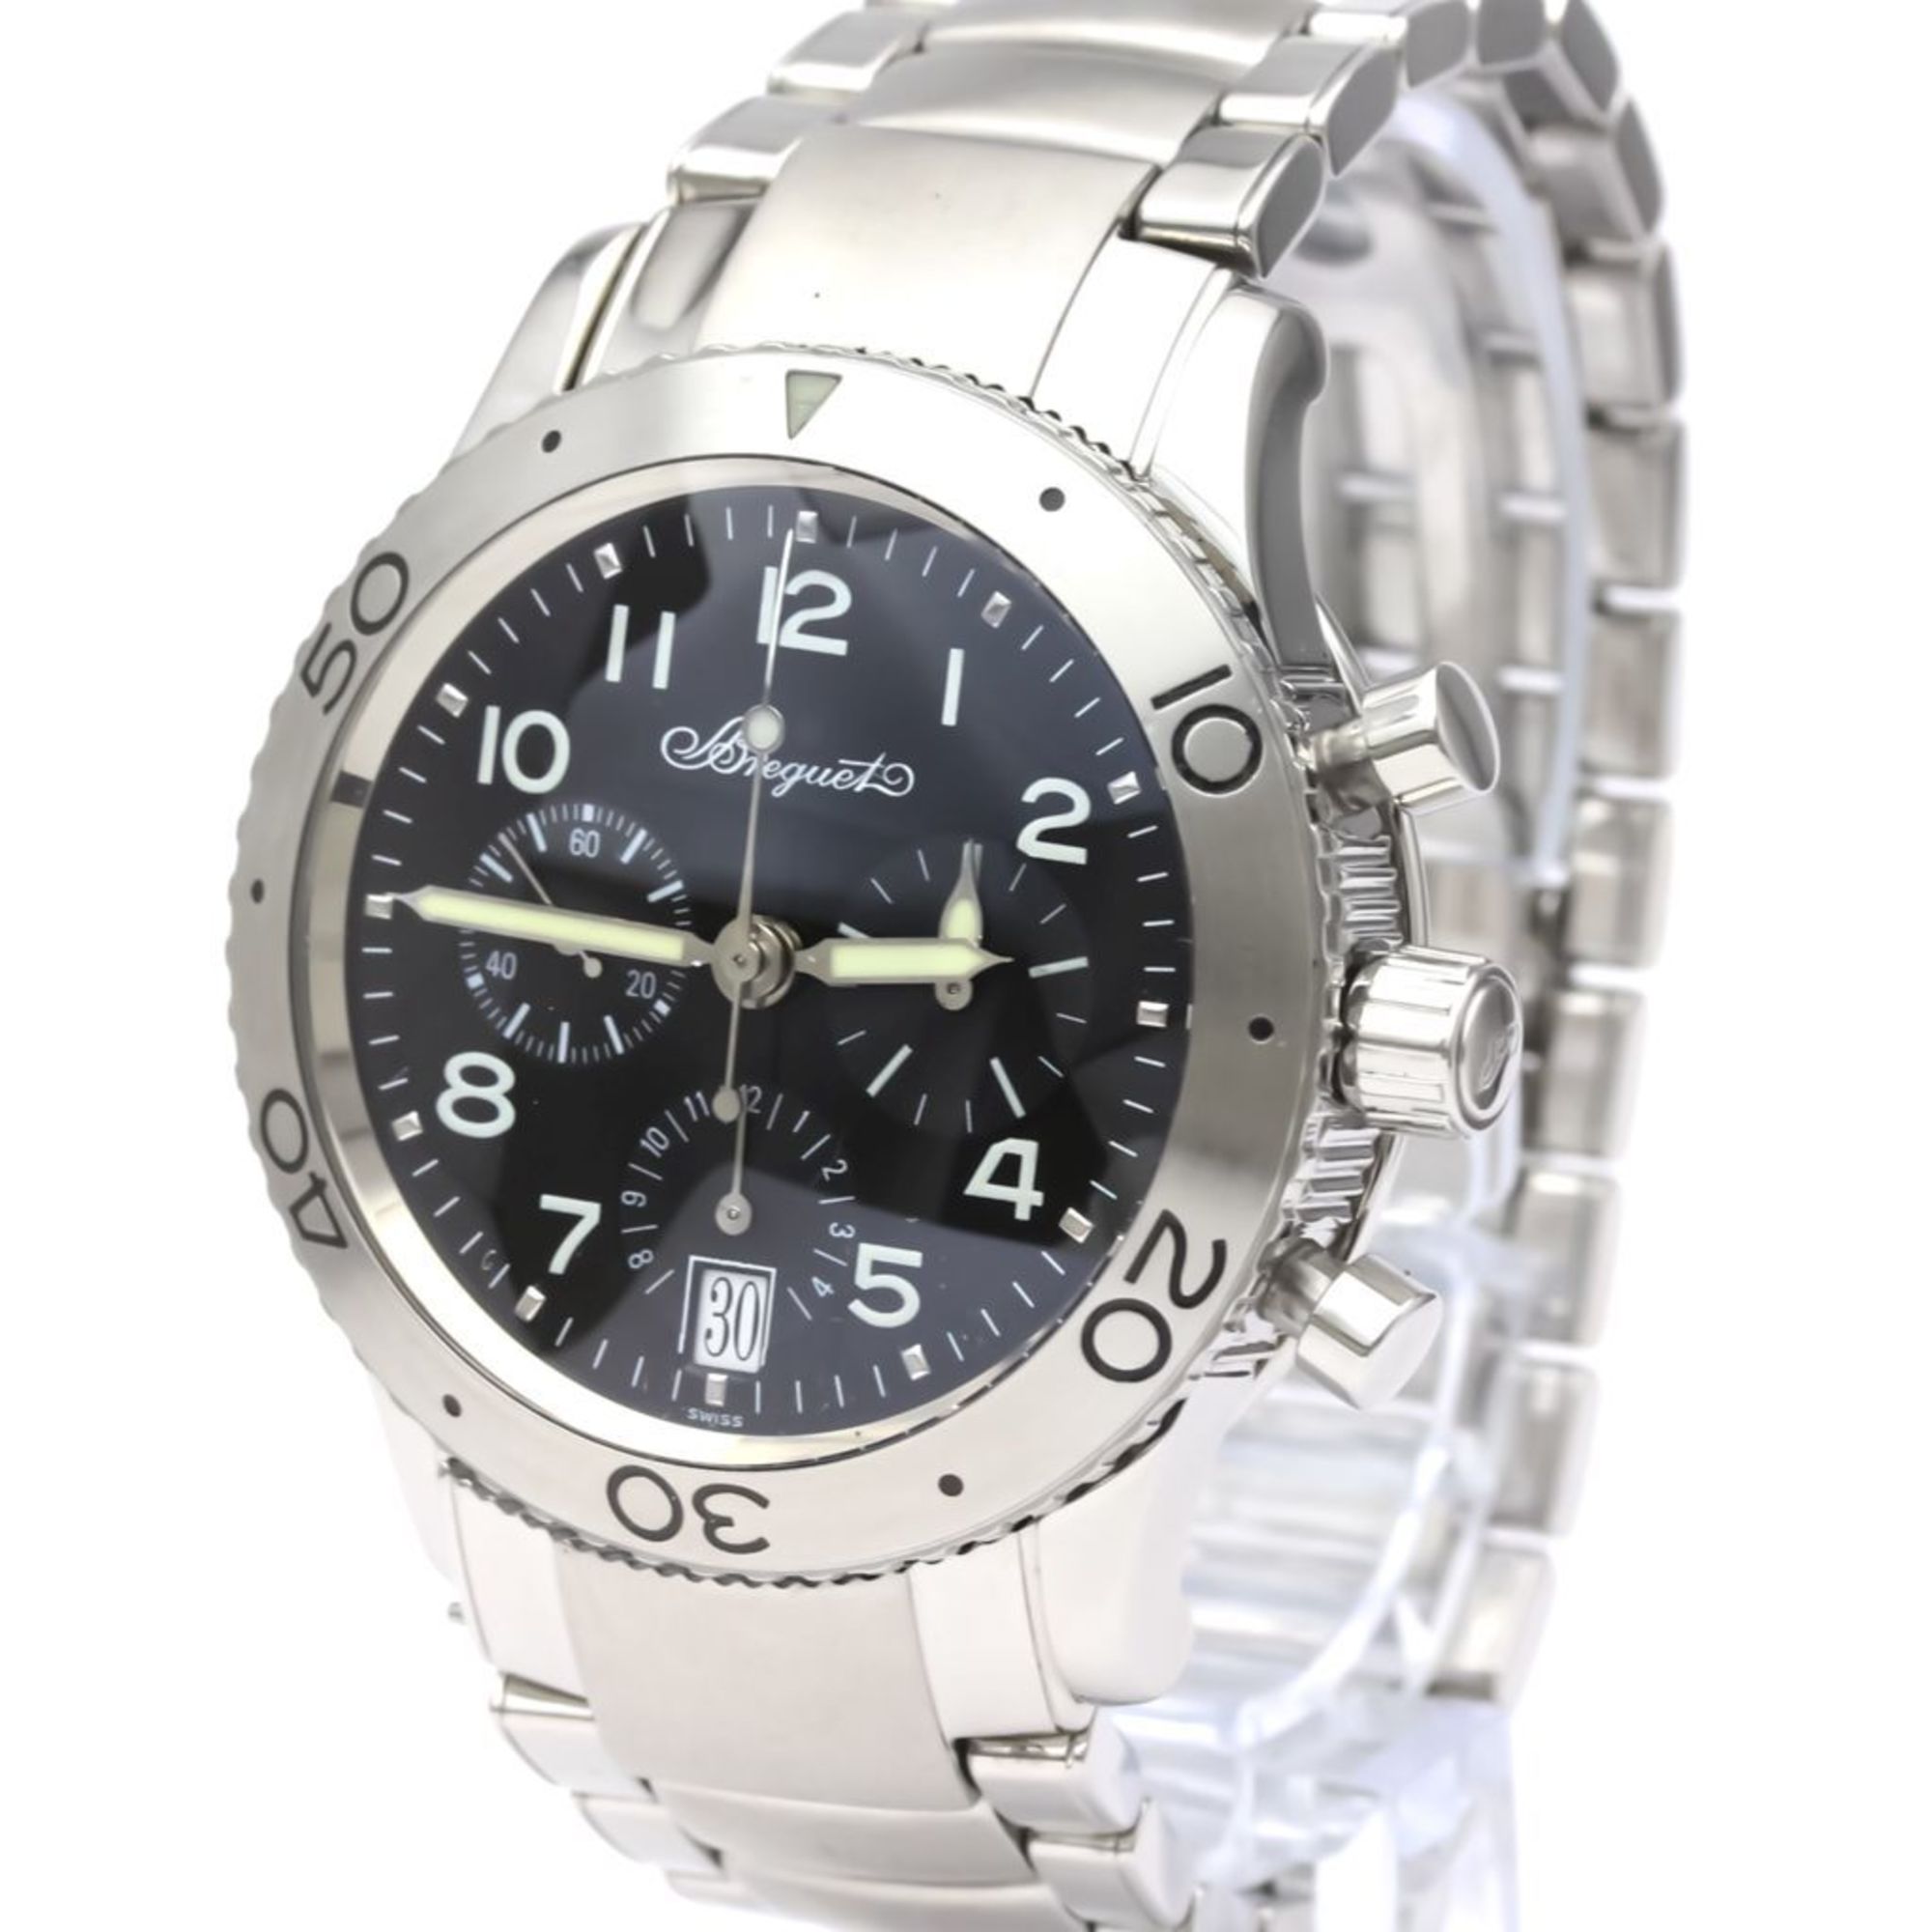 Polished BREGUET Transatlantique Type XX Steel Automatic Watch 3820 BF552134